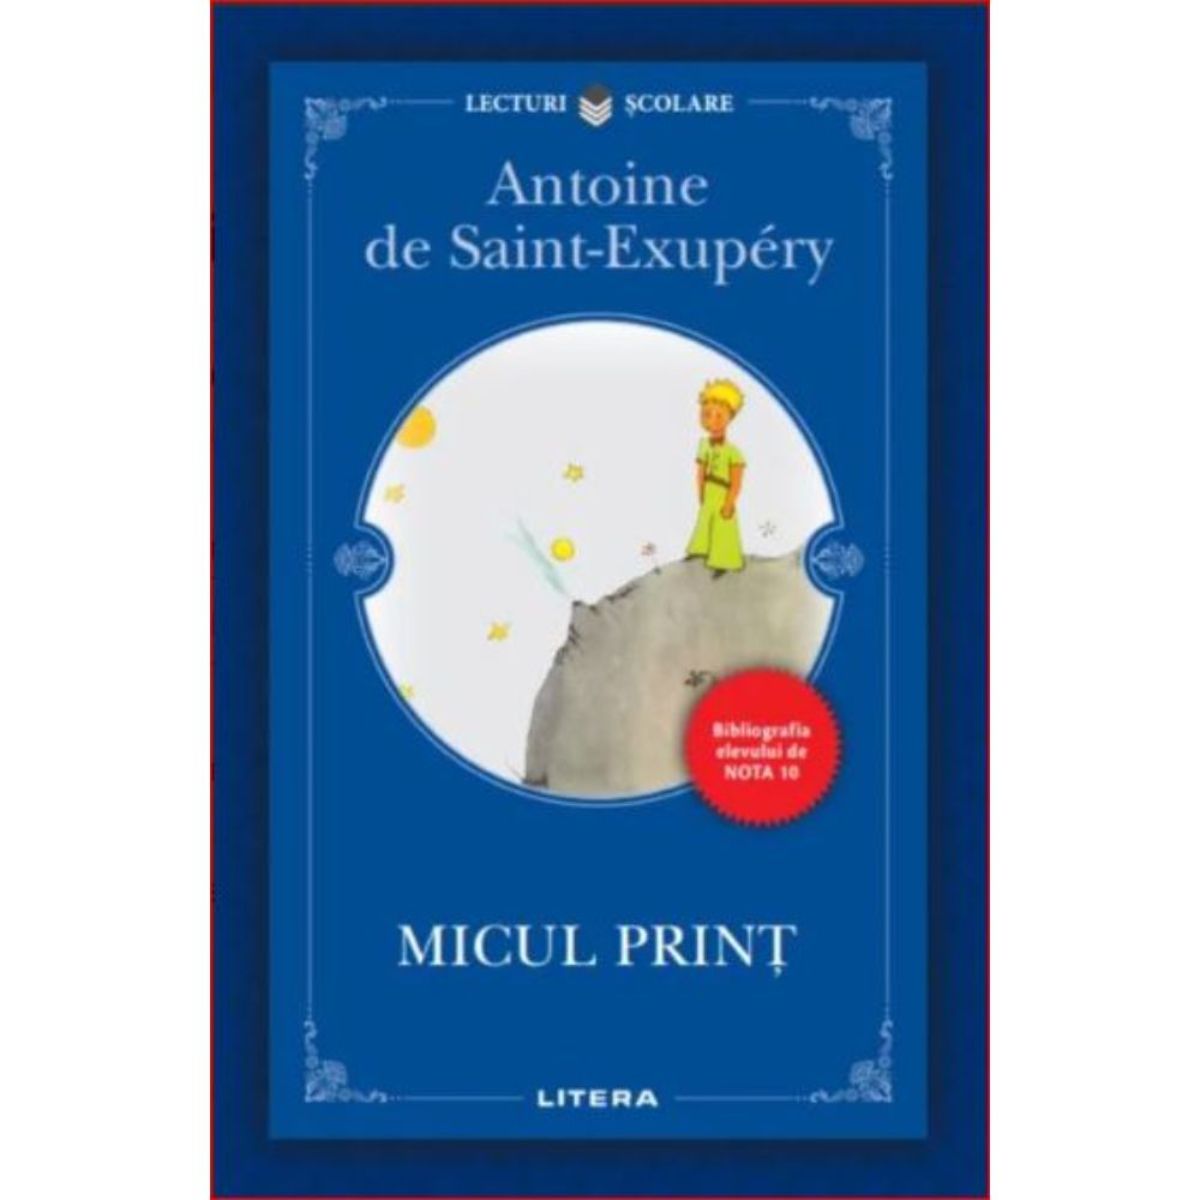 Micul Print, Antoine de Saint-Exupery, Editie noua Litera